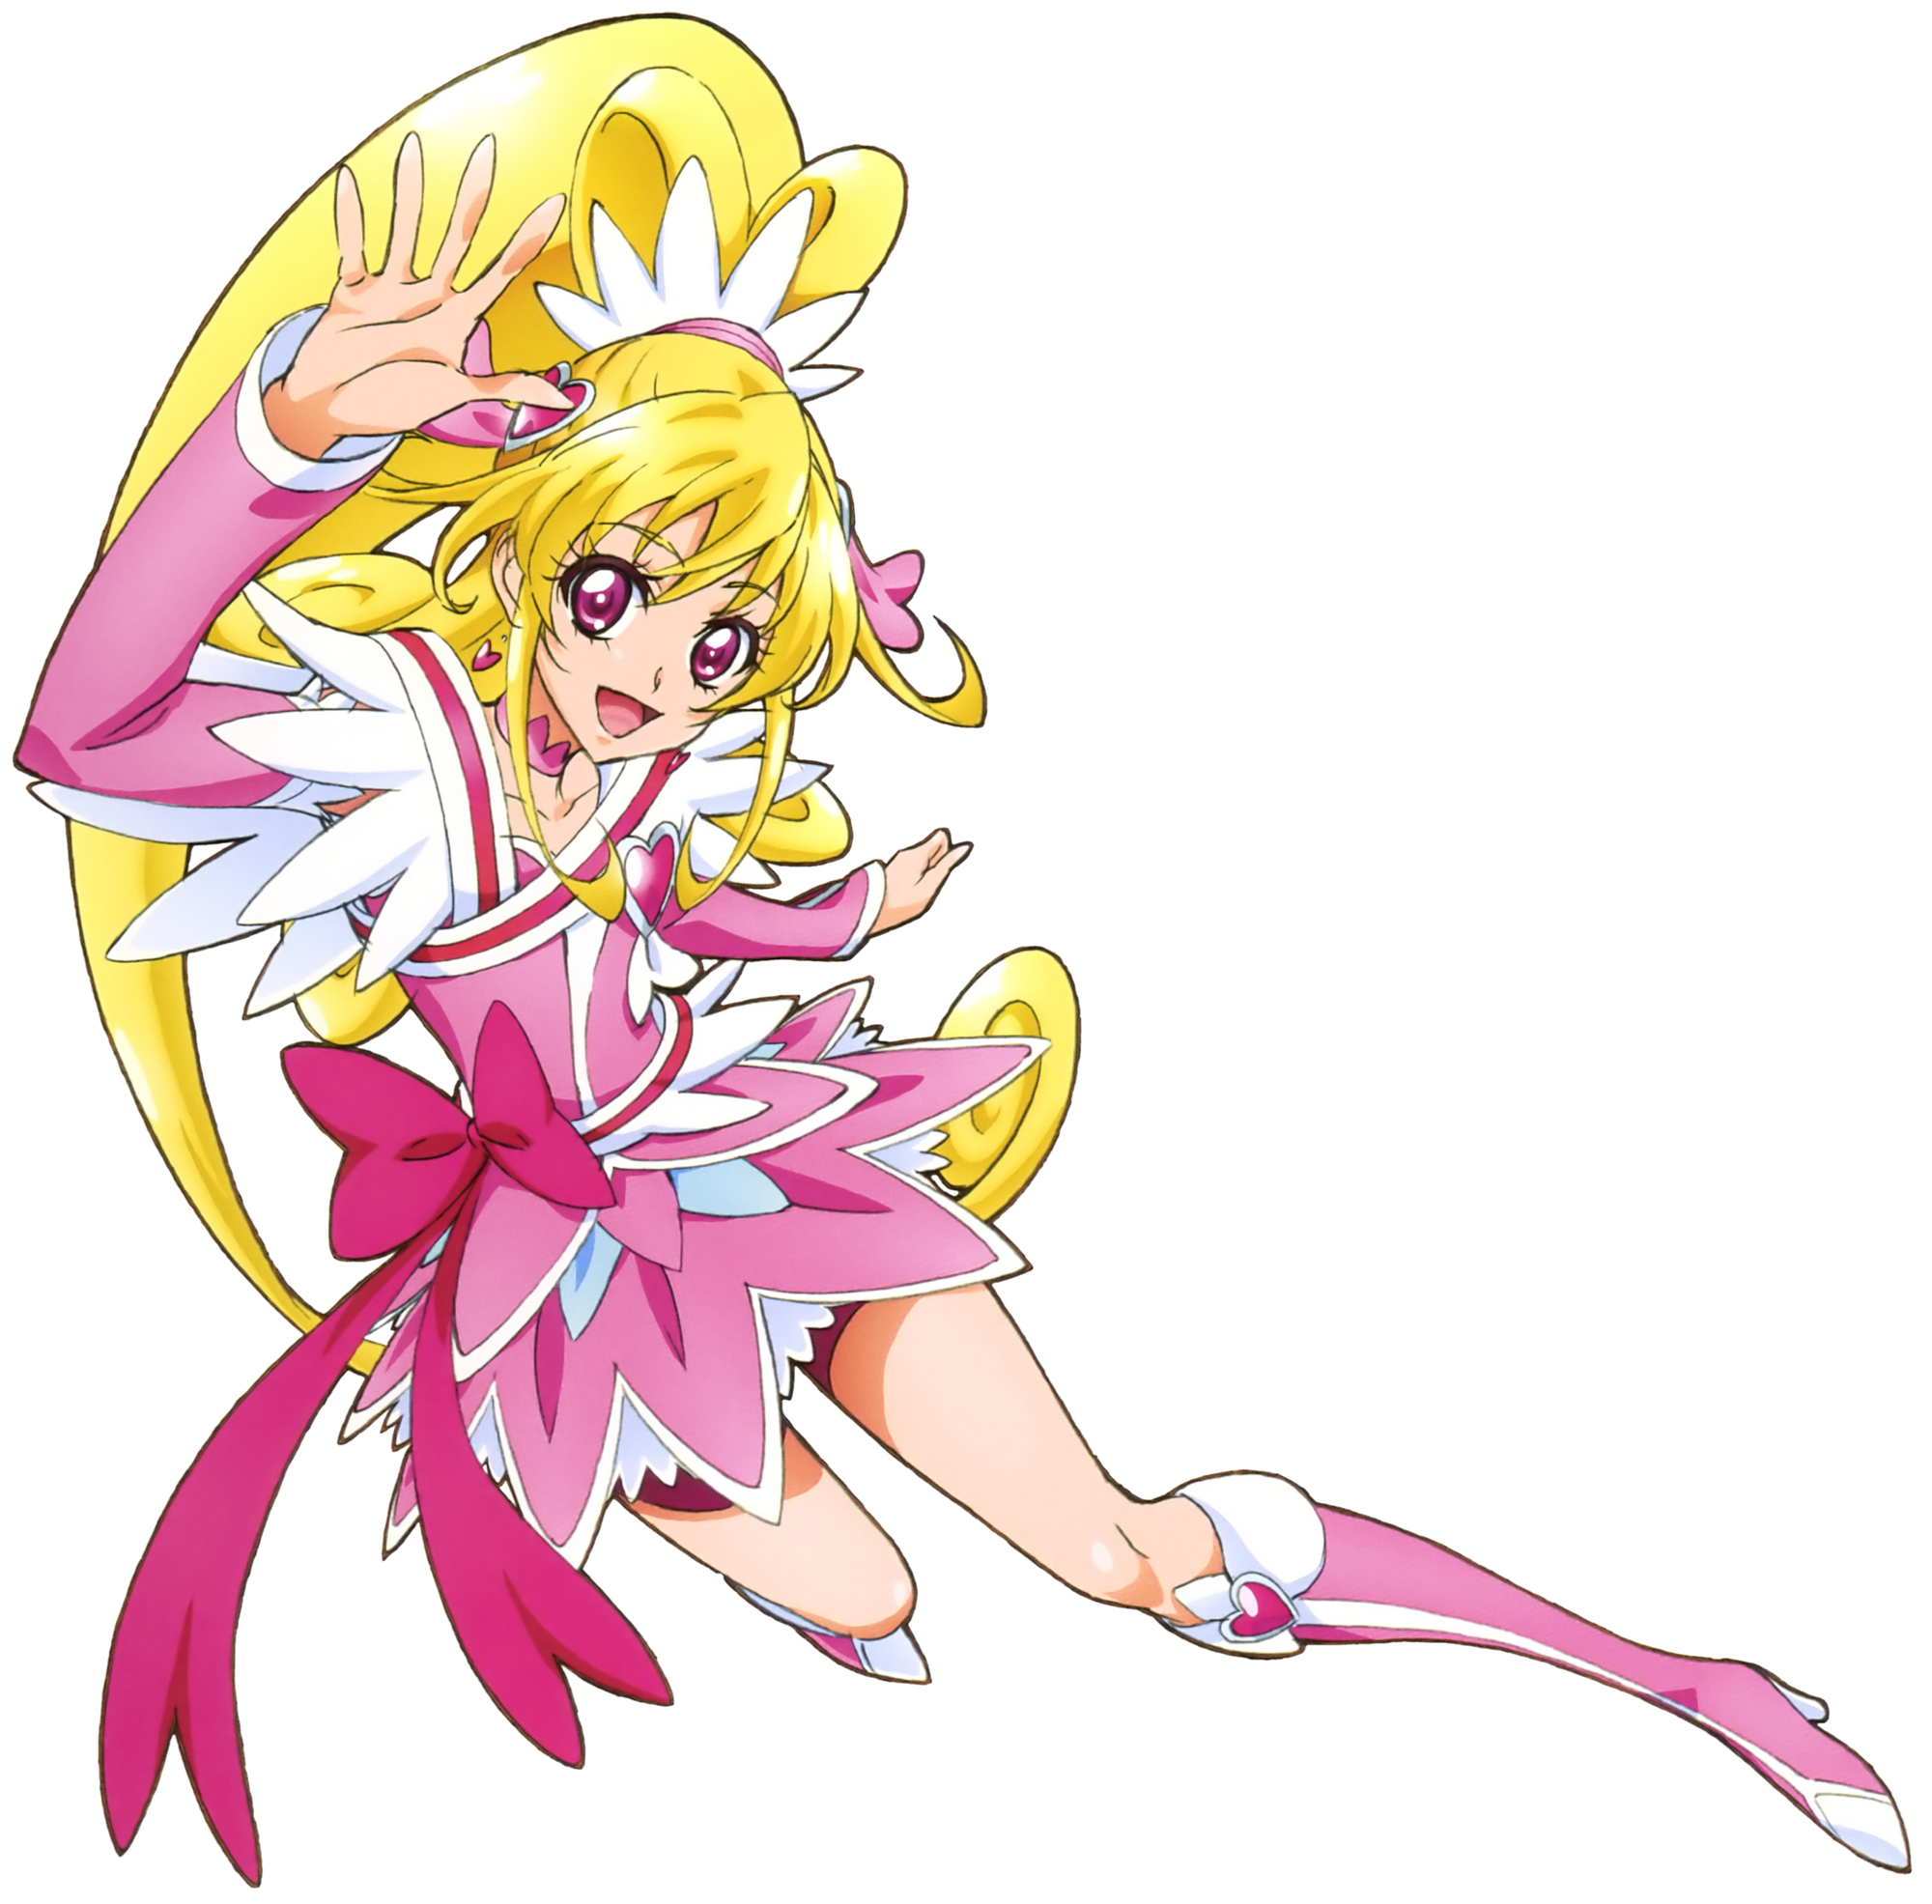 Image Doki Doki Pretty Cure Cure Heart Pose4png Magical Girl Mahou Shoujo 魔法少女 Wiki 1570